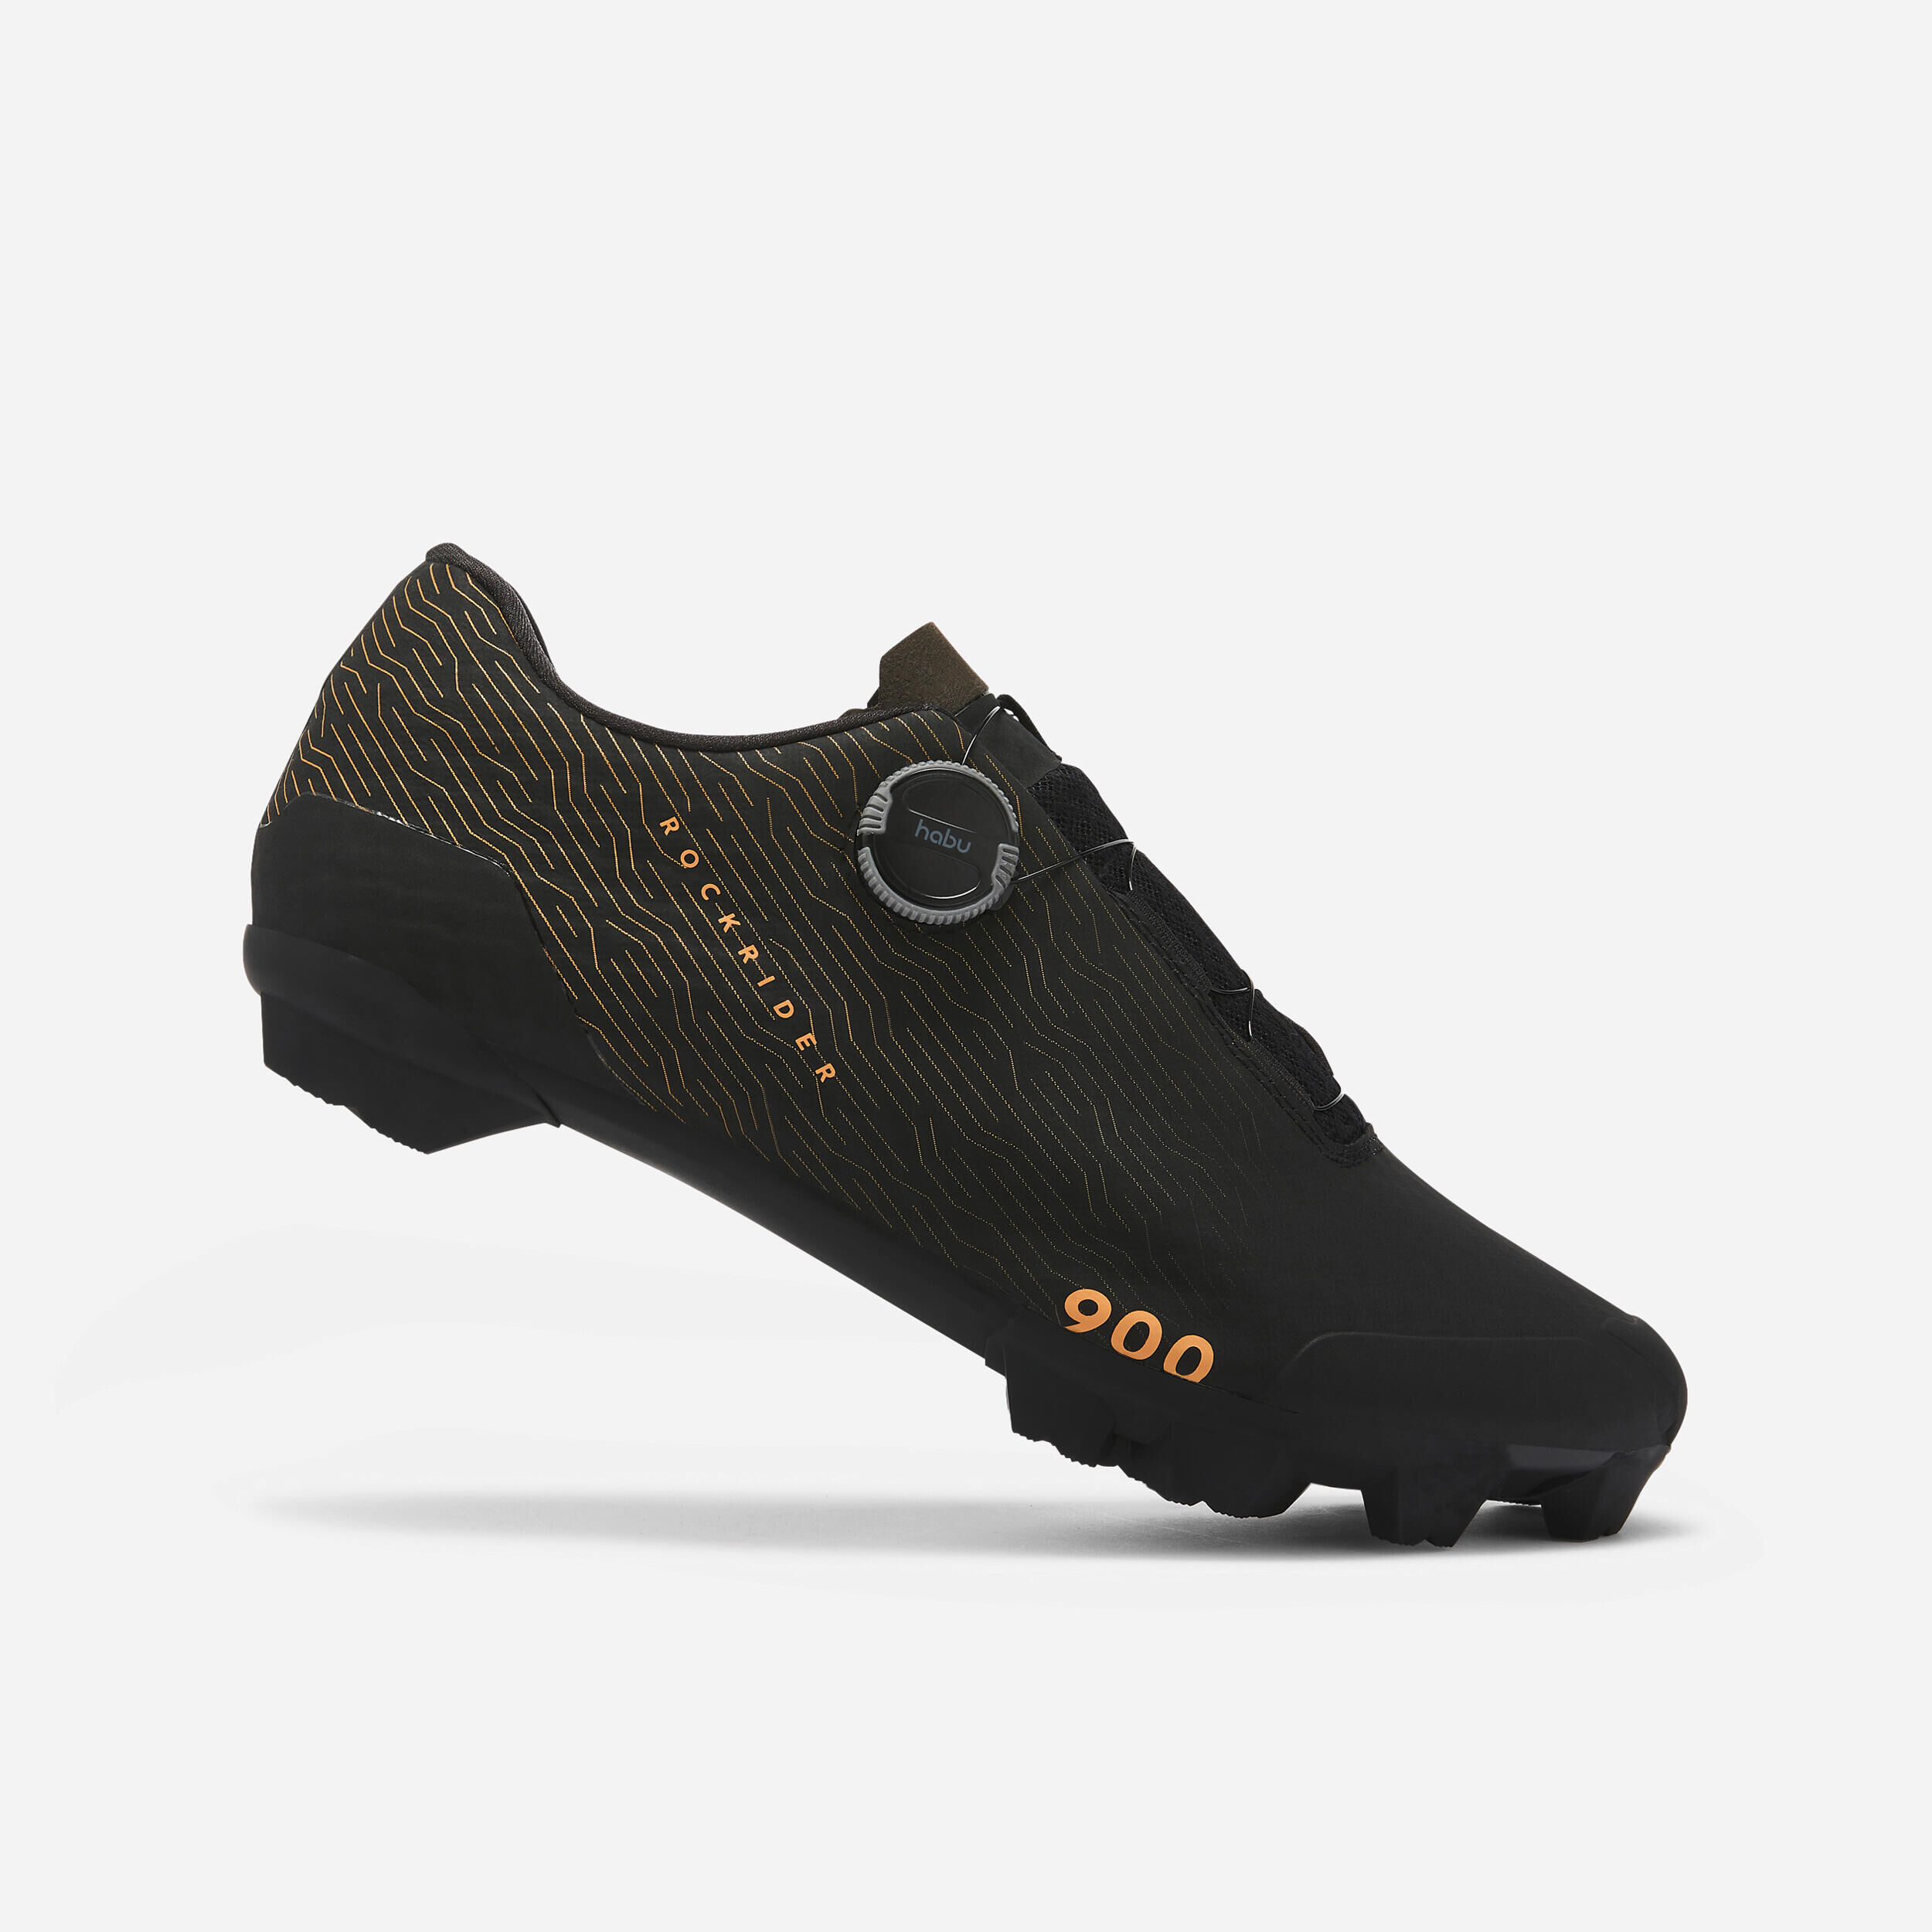 ROCKRIDER Mountain Bike/Gravel Shoes Race 900 - Ochre - Habu Fit System